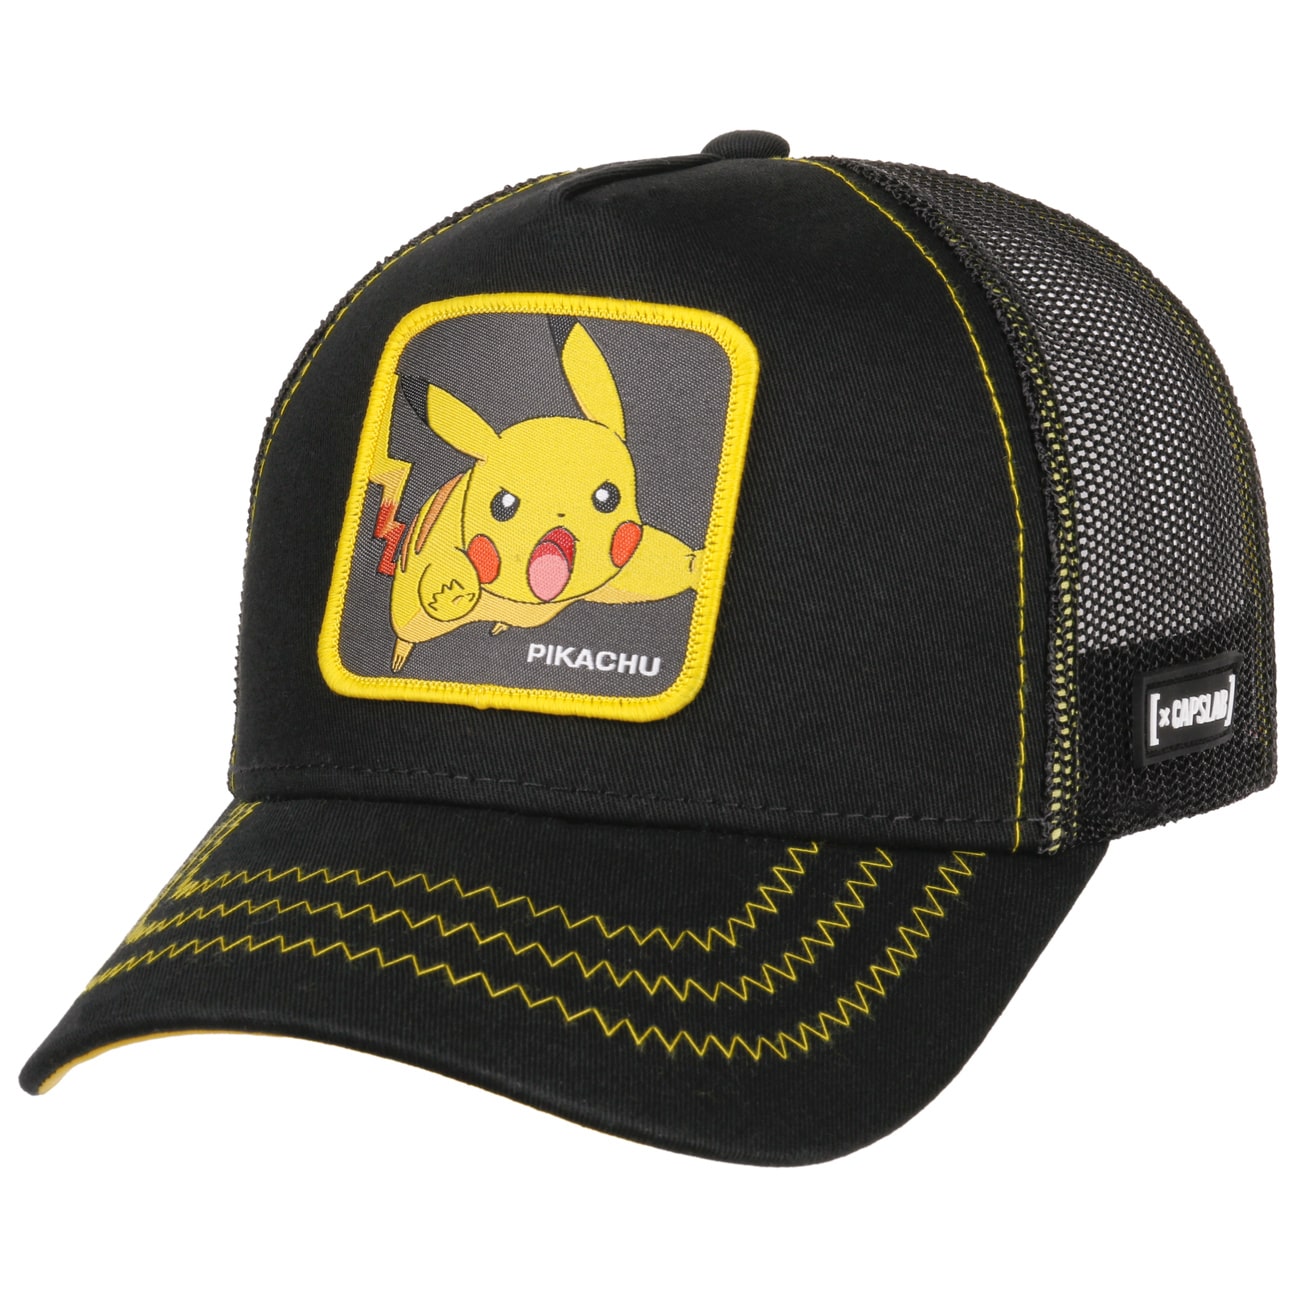 Pikachu Trucker Keps by Capslab